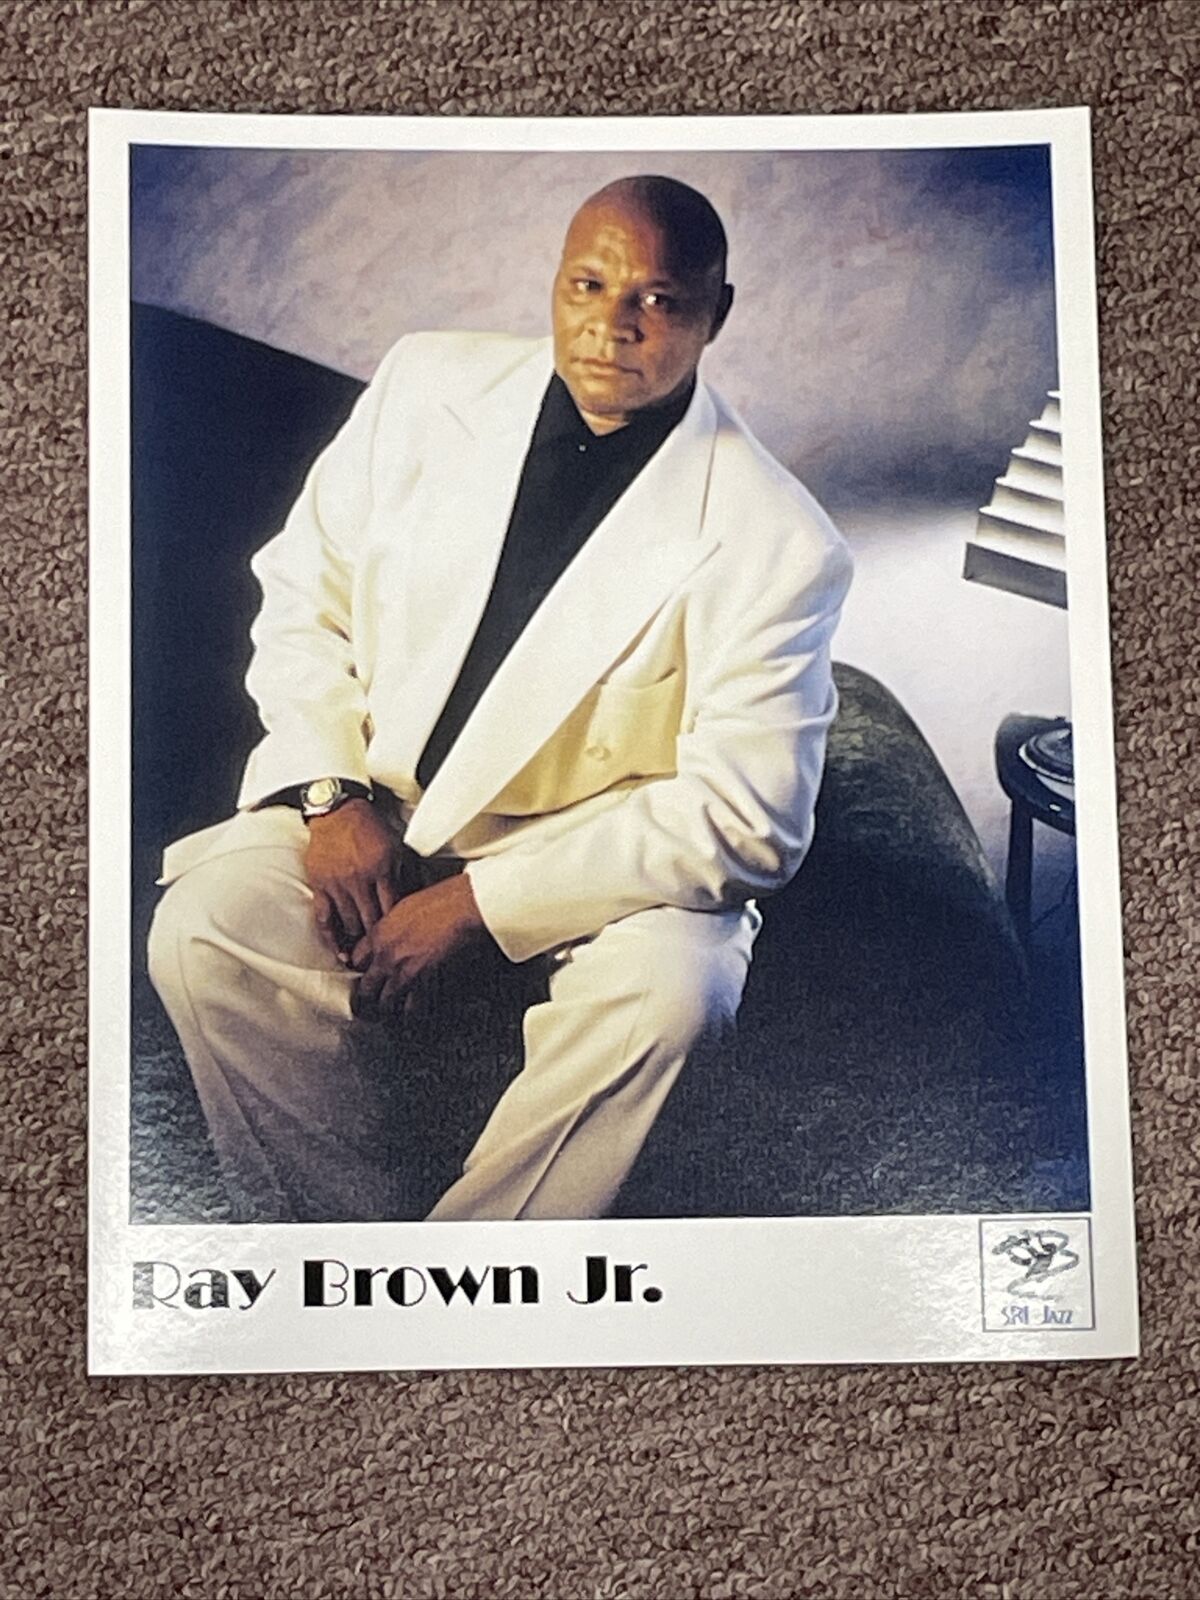 RAY BROWN JR. (son Of Ella Fitzgerald) 8 X 10 Photo